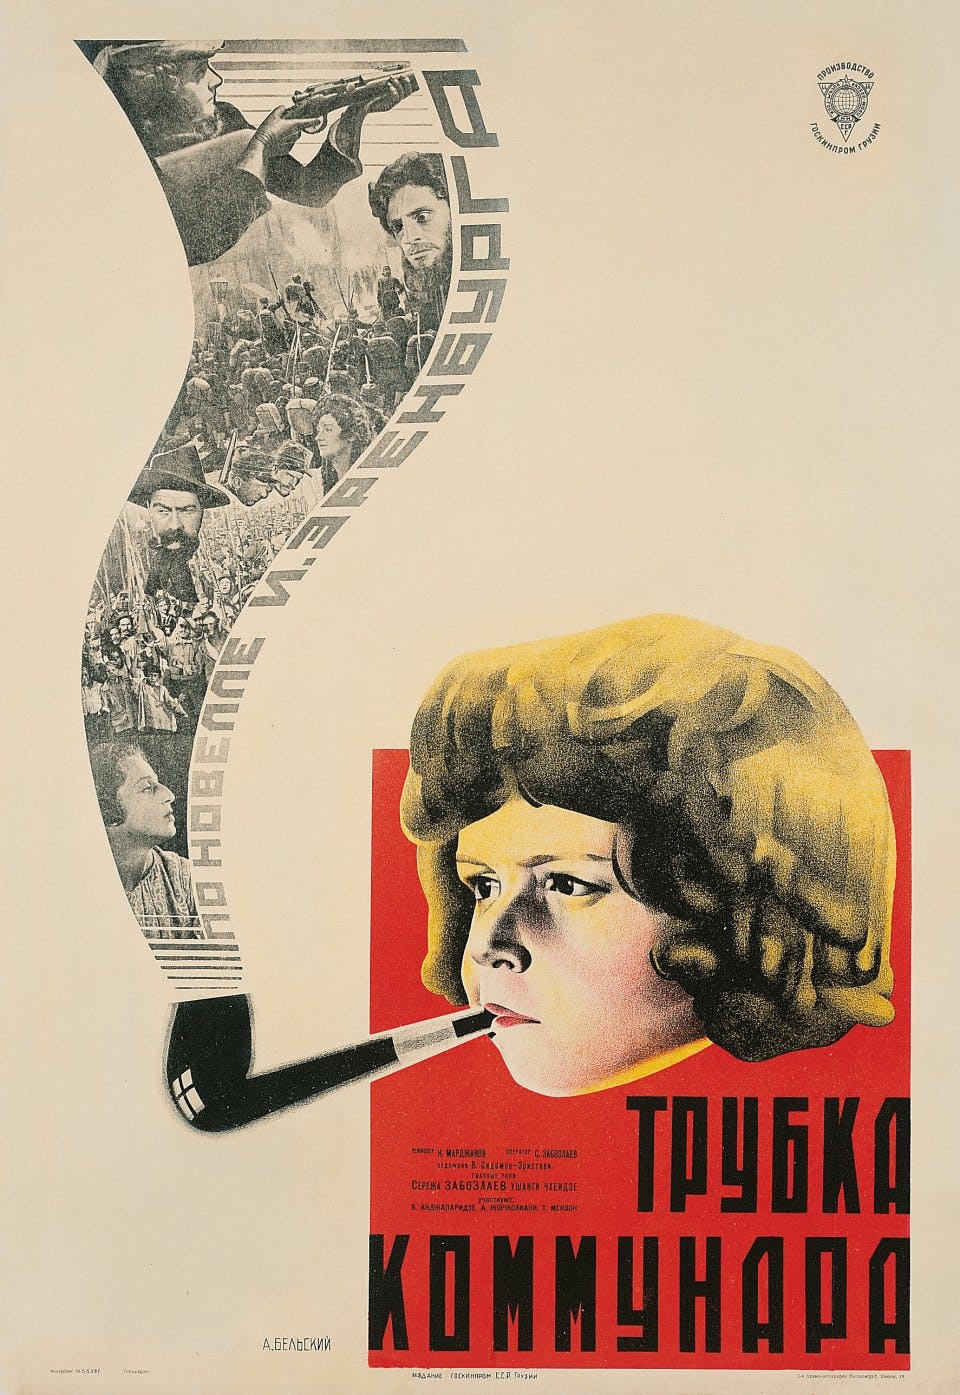 Taschen's new book celebrates the golden age of film poster design